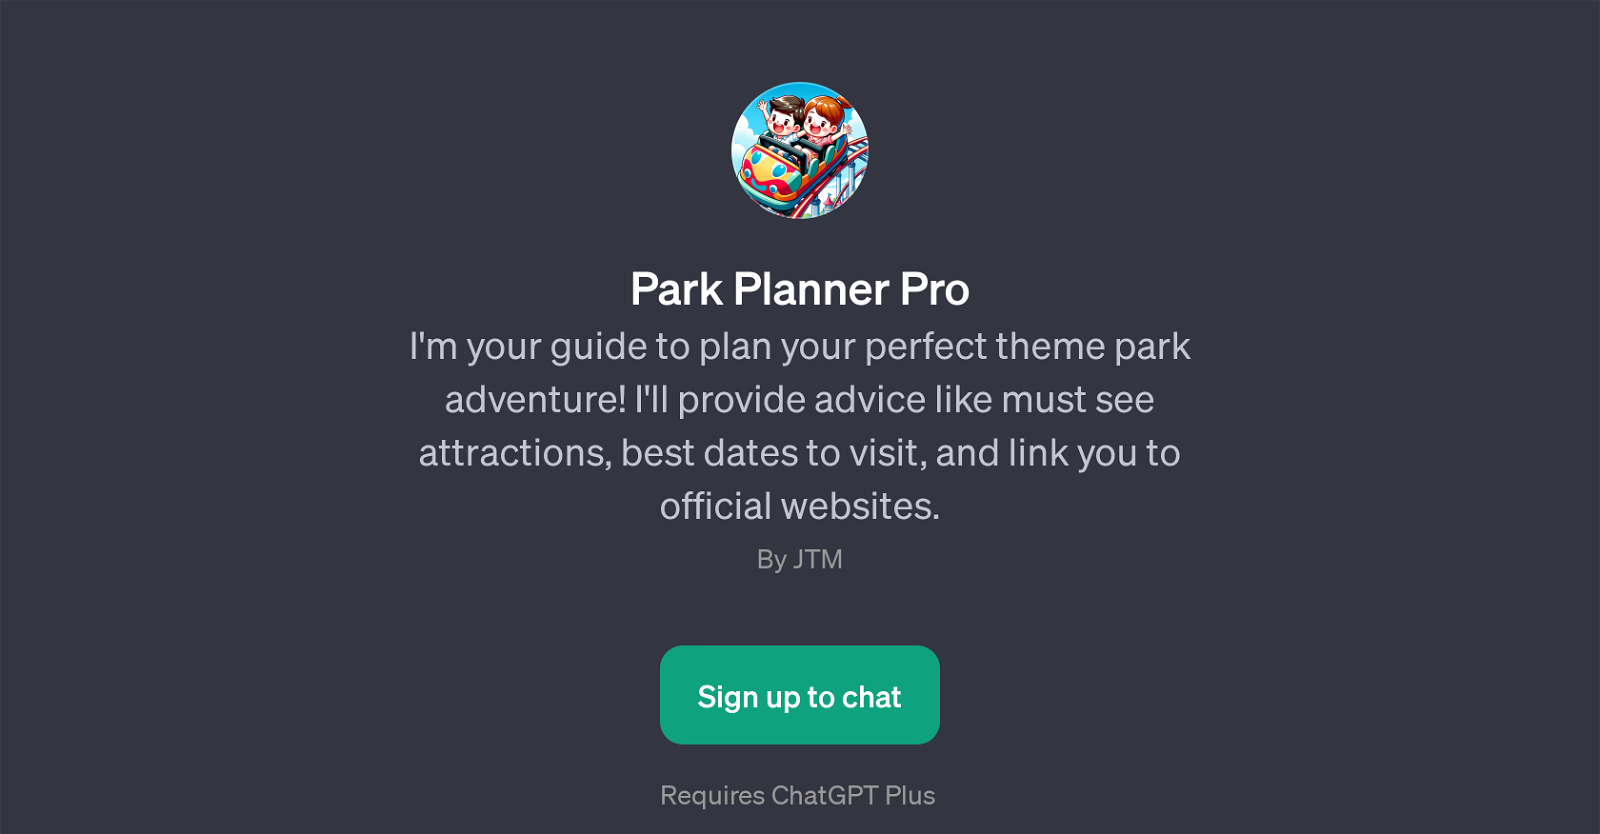 Park Planner Pro website